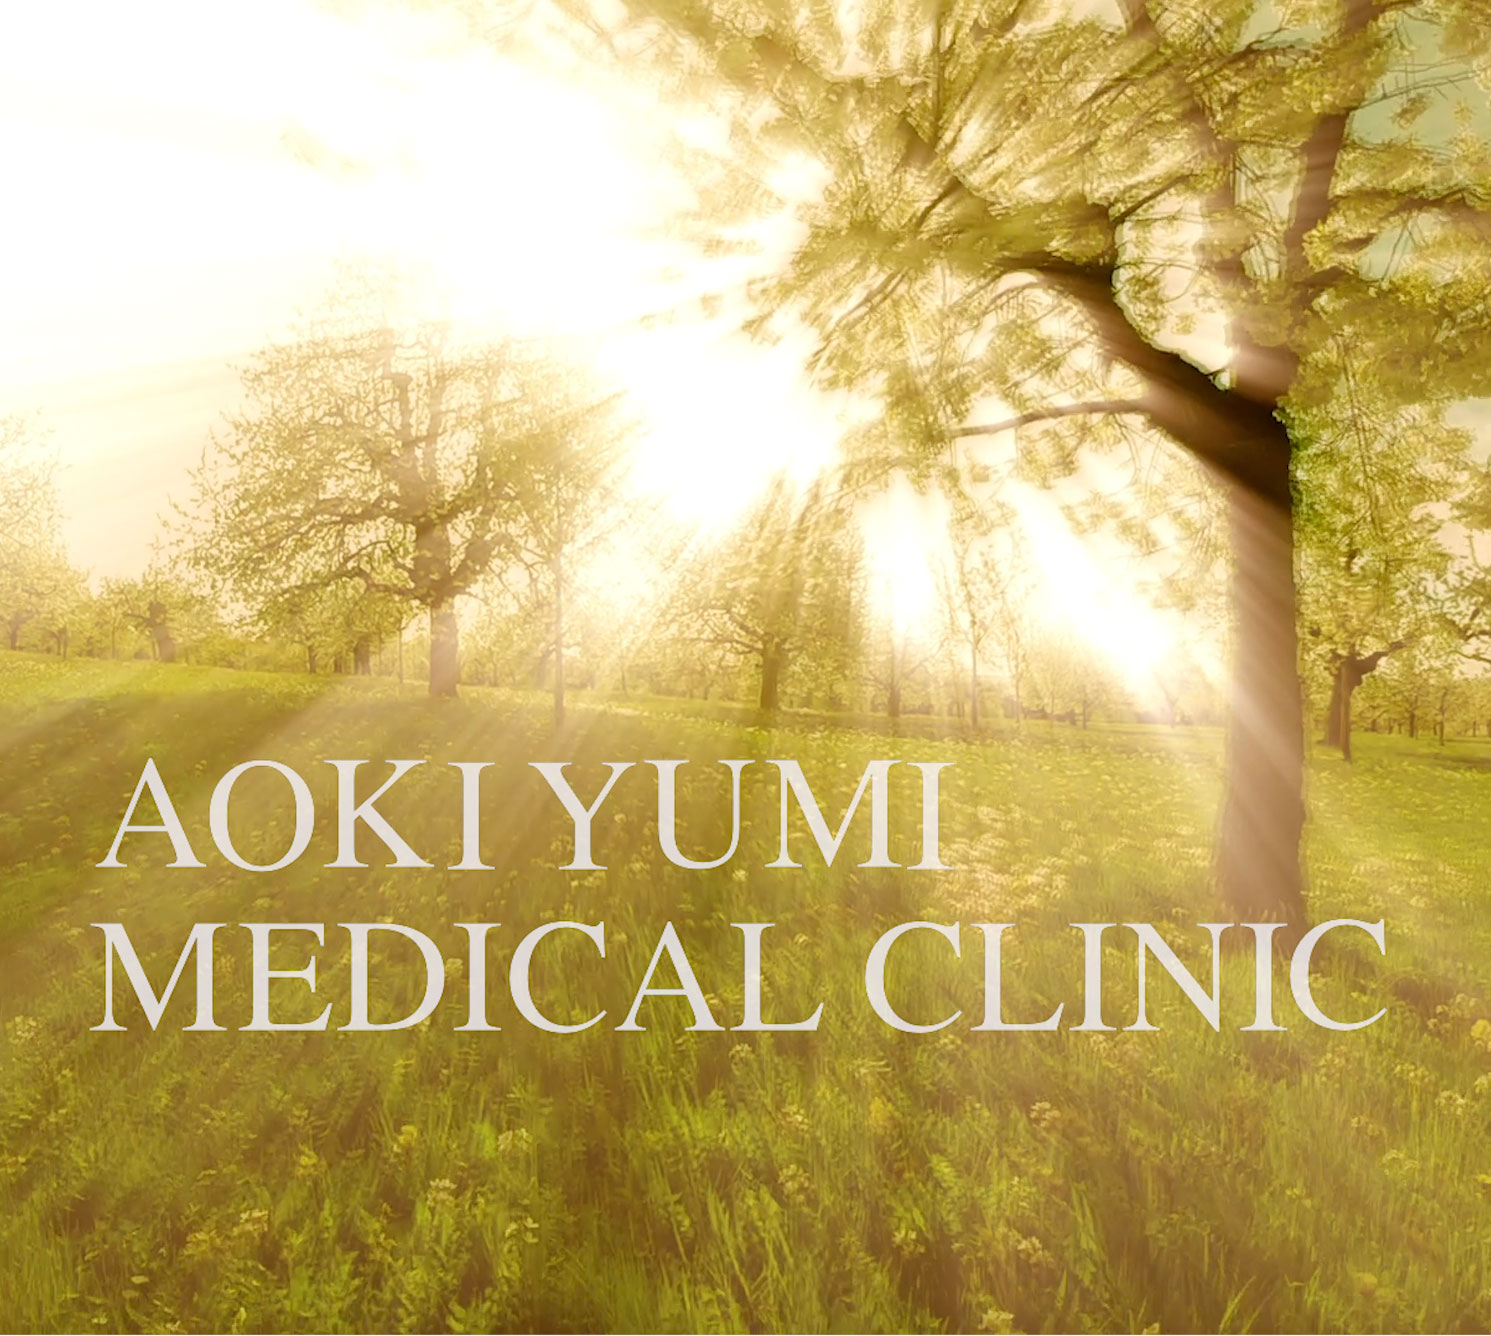 Aoki Yumi Medical Clinic3